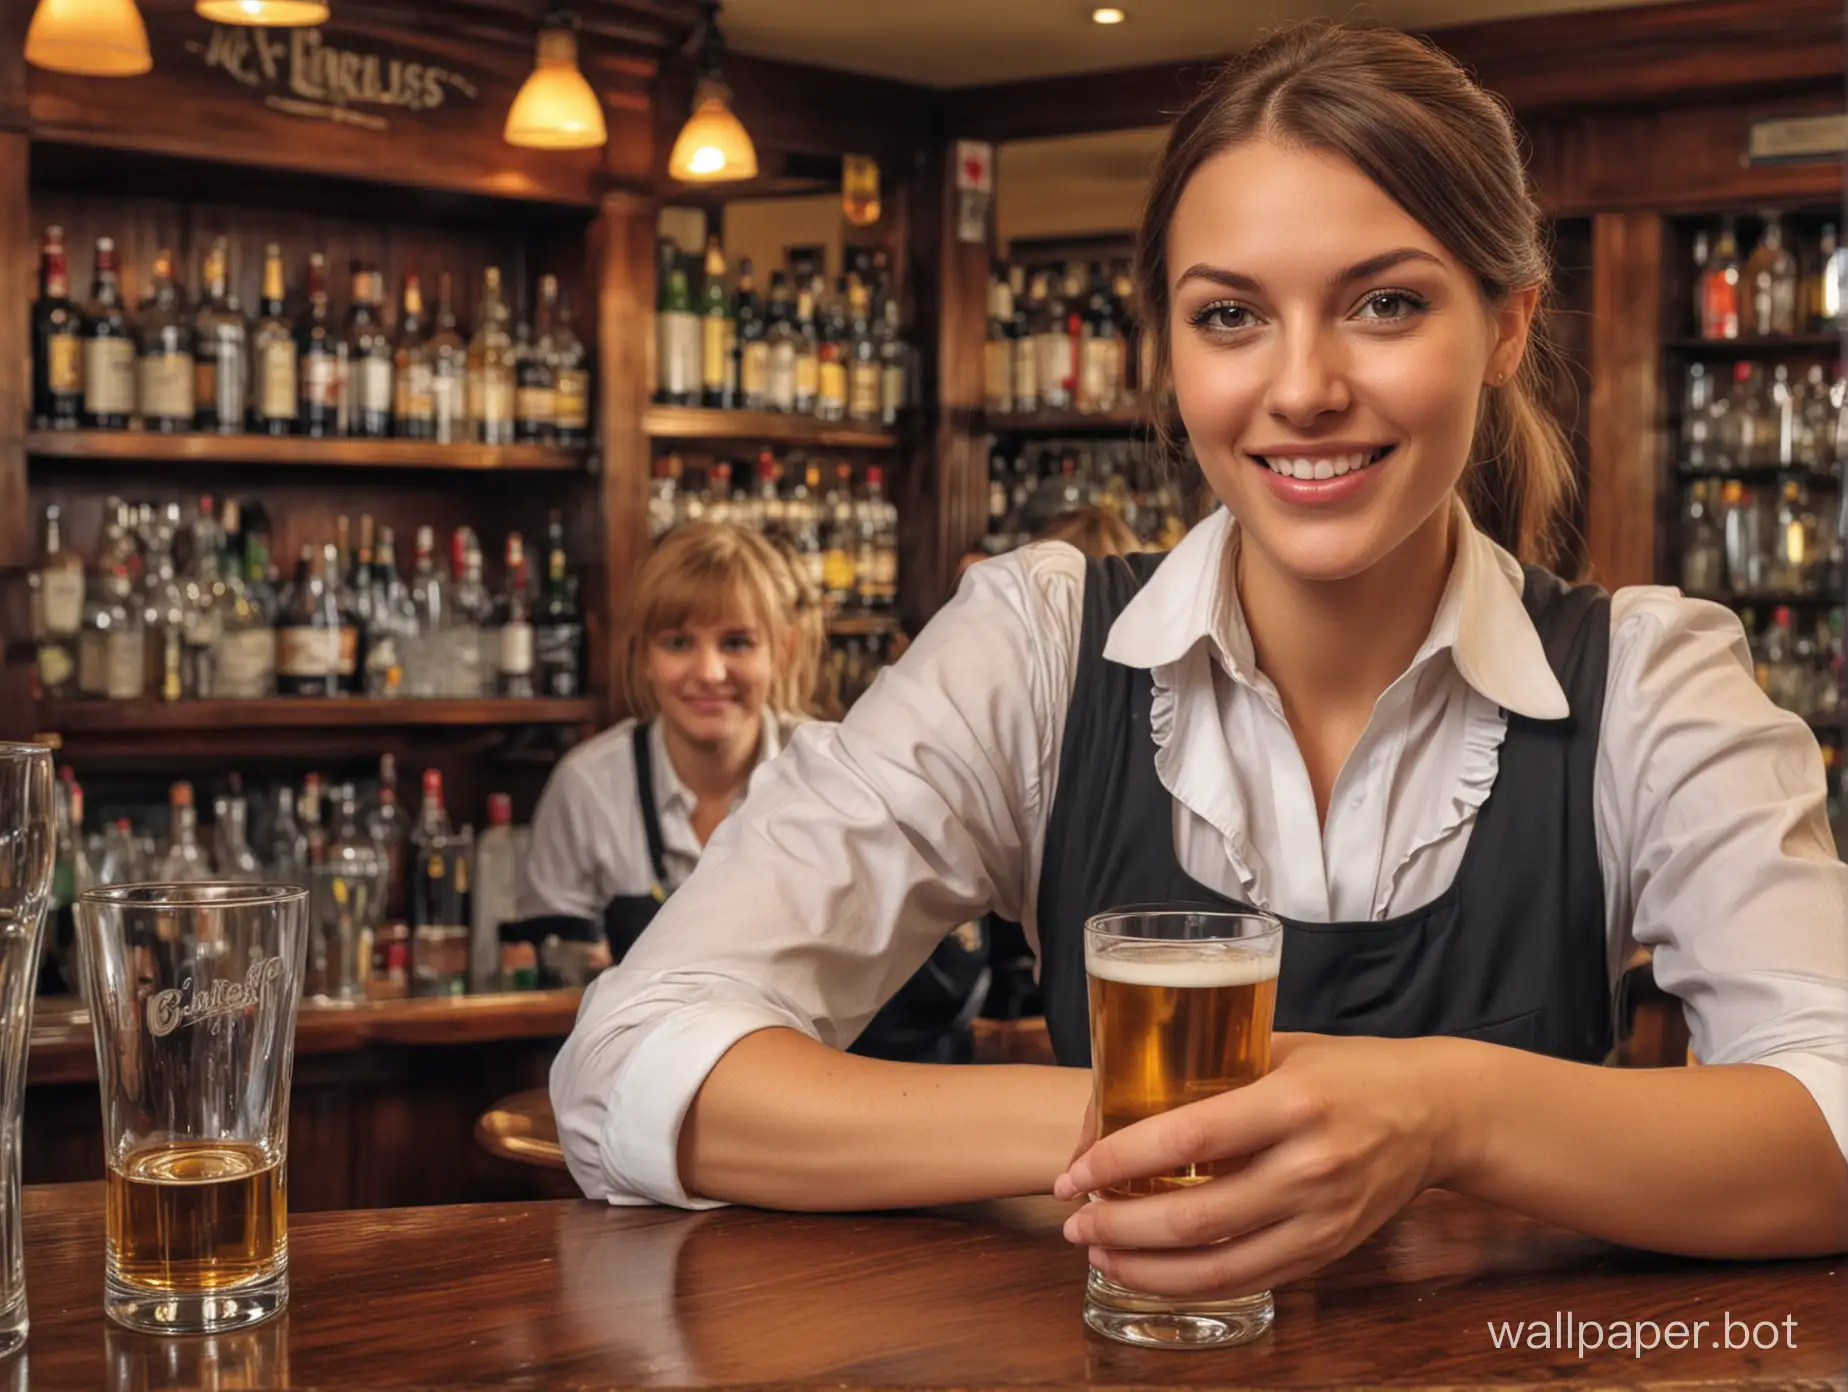 English-Pub-Waitress-Serving-Drinks-in-Vibrant-HDR-Setting